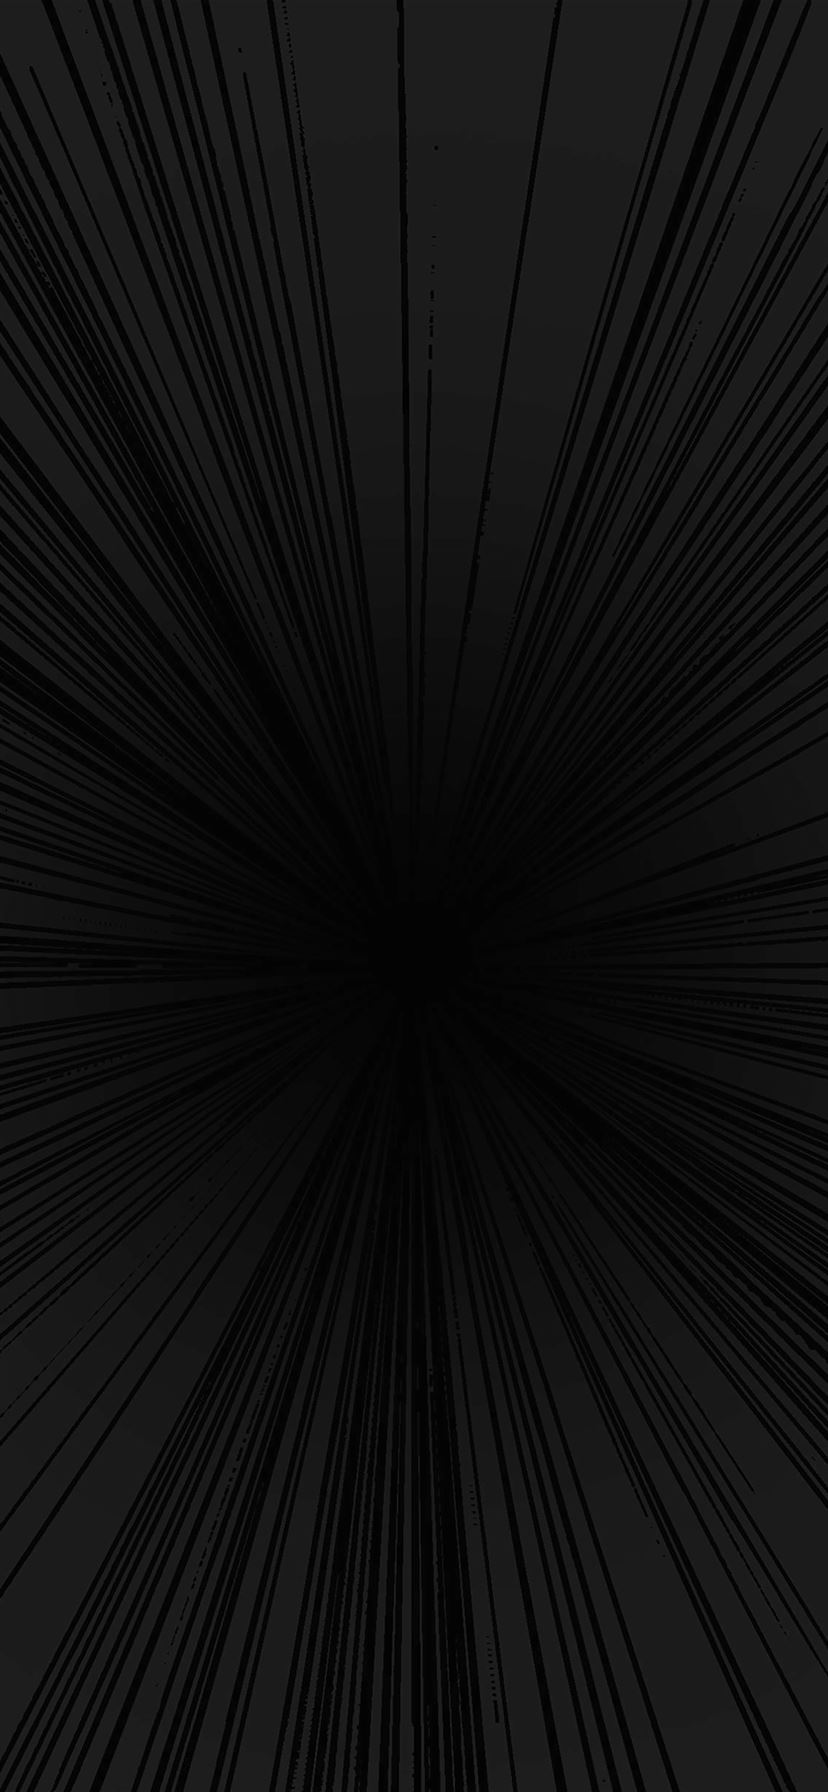 Action line dark pattern iPhone X Wallpaper Free Download